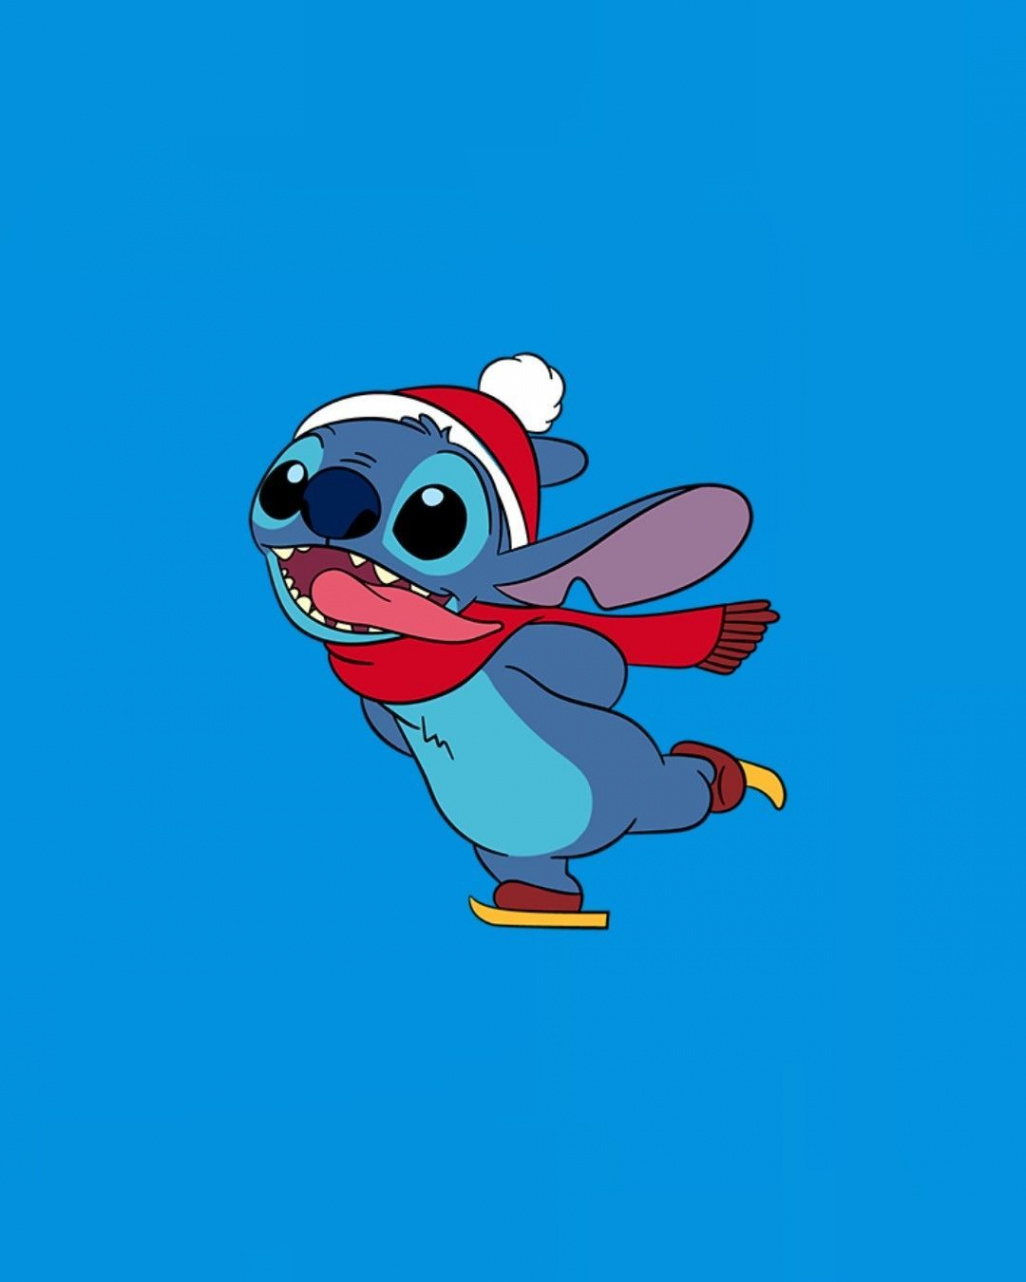 Stitch Christmas Wallpaper Explore more Blue Koala, Cute, Disney